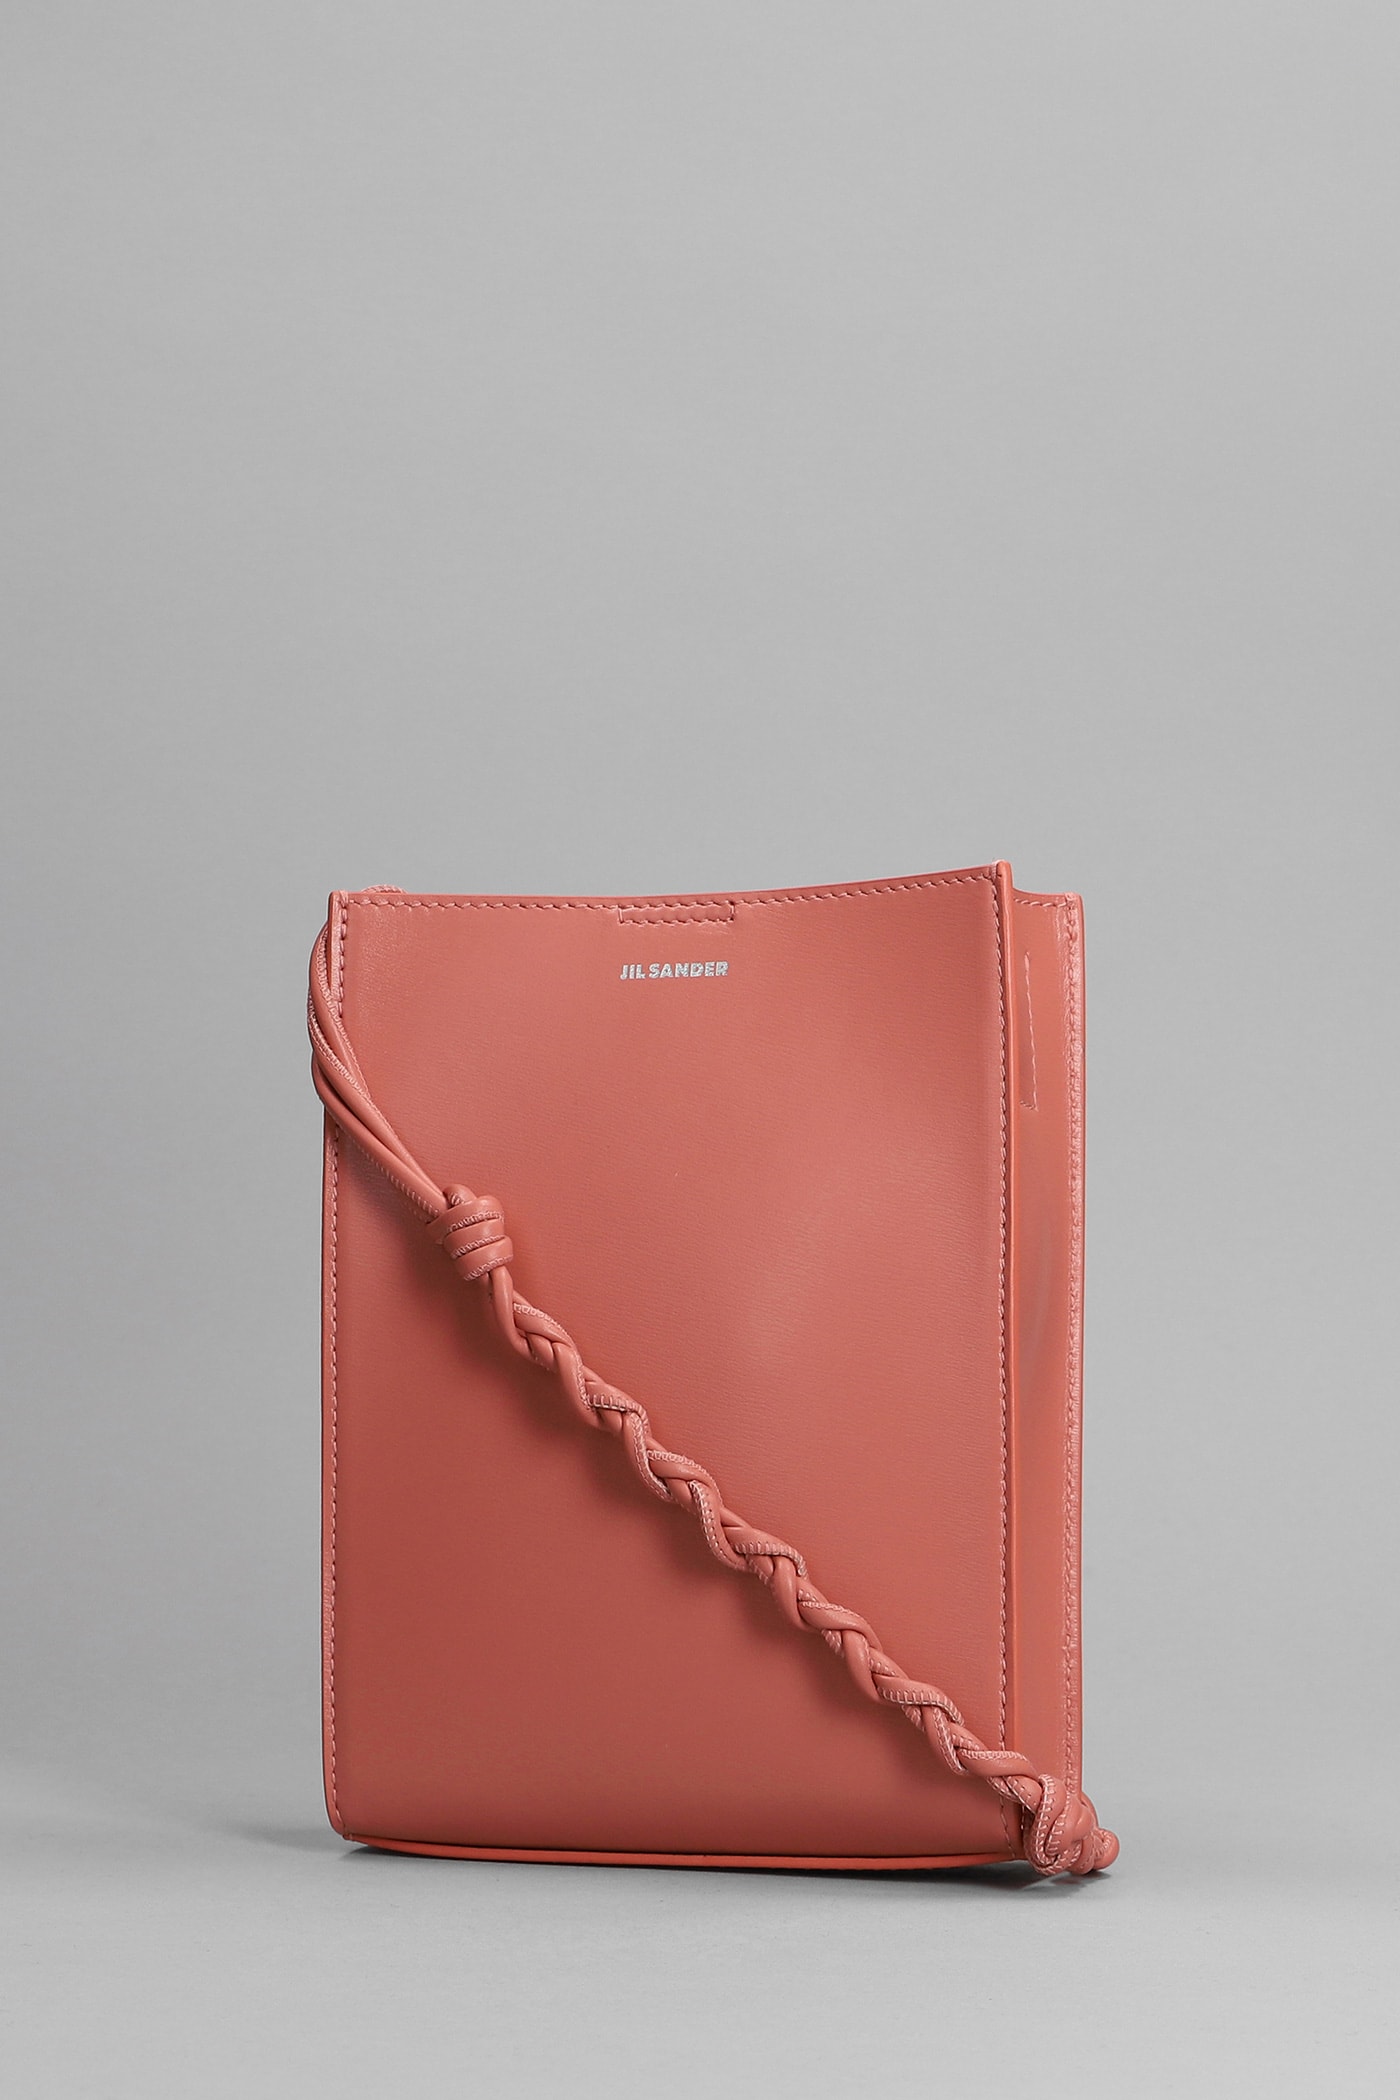 Jil Sander Tangle Sm Shoulder Bag In Rose-pink Leather - Realry: A